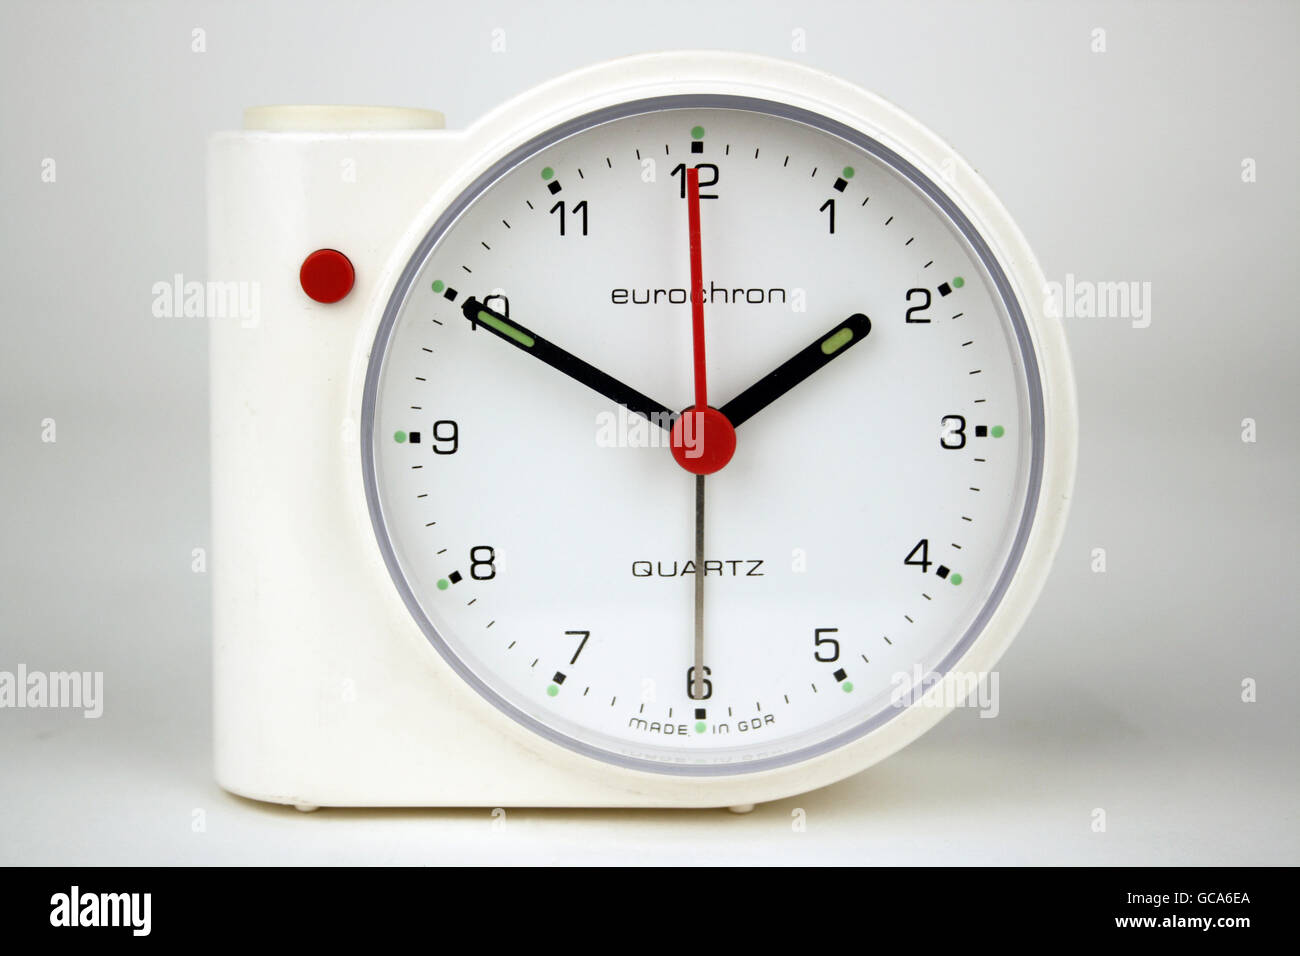 Alarm clock ruhla eurochron quartz hi-res stock photography and images -  Alamy